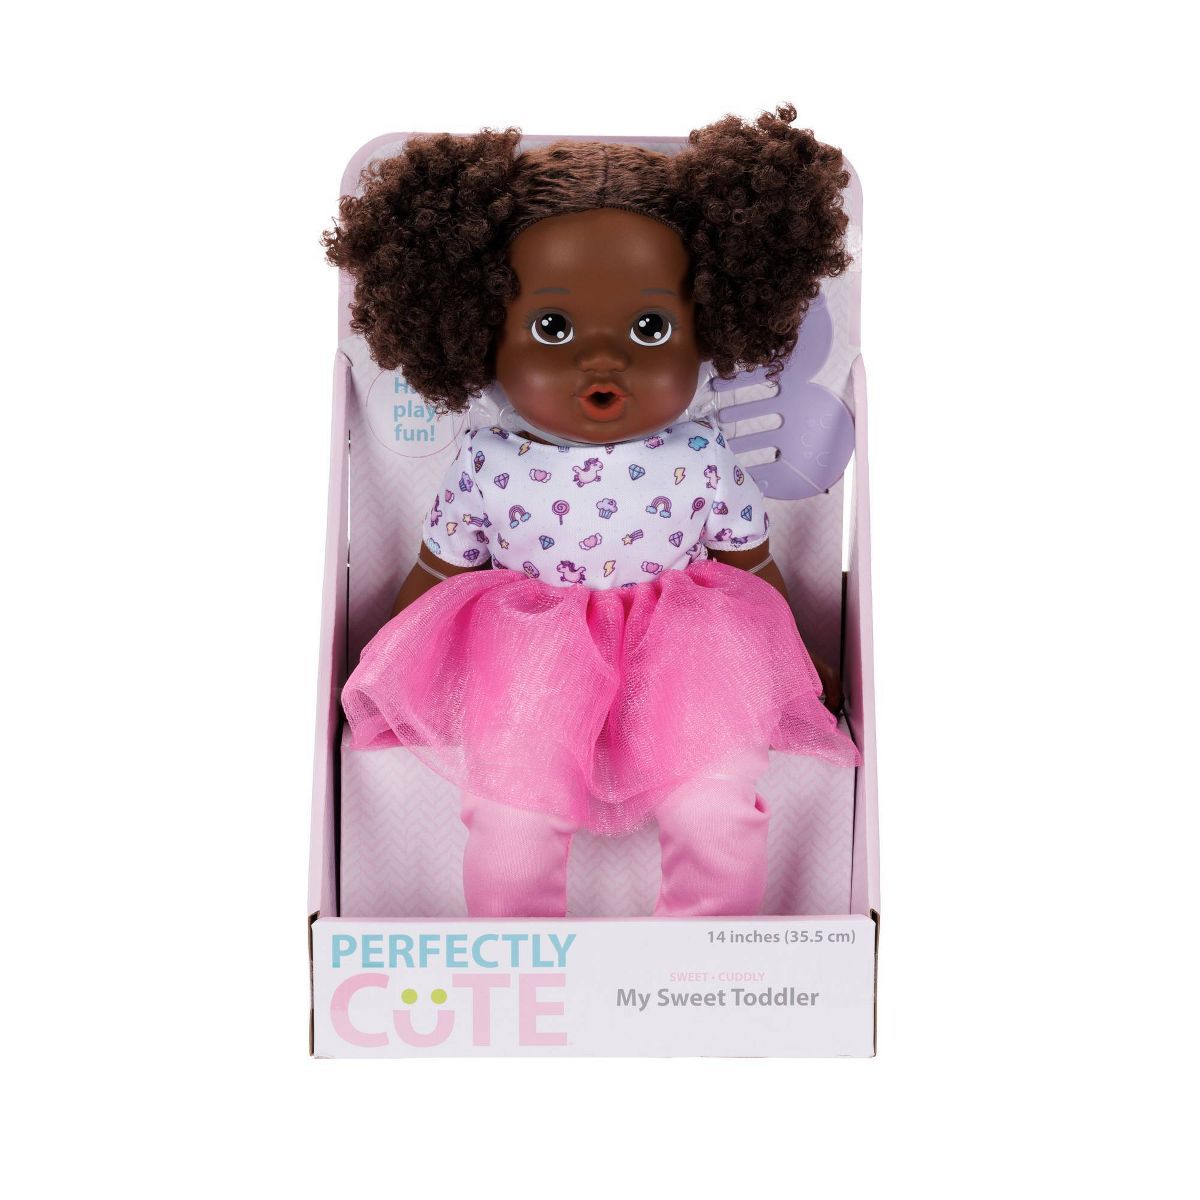 Perfectly Cute My Sweet Toddler Baby Doll - Black Hair/Brown Eyes | Target